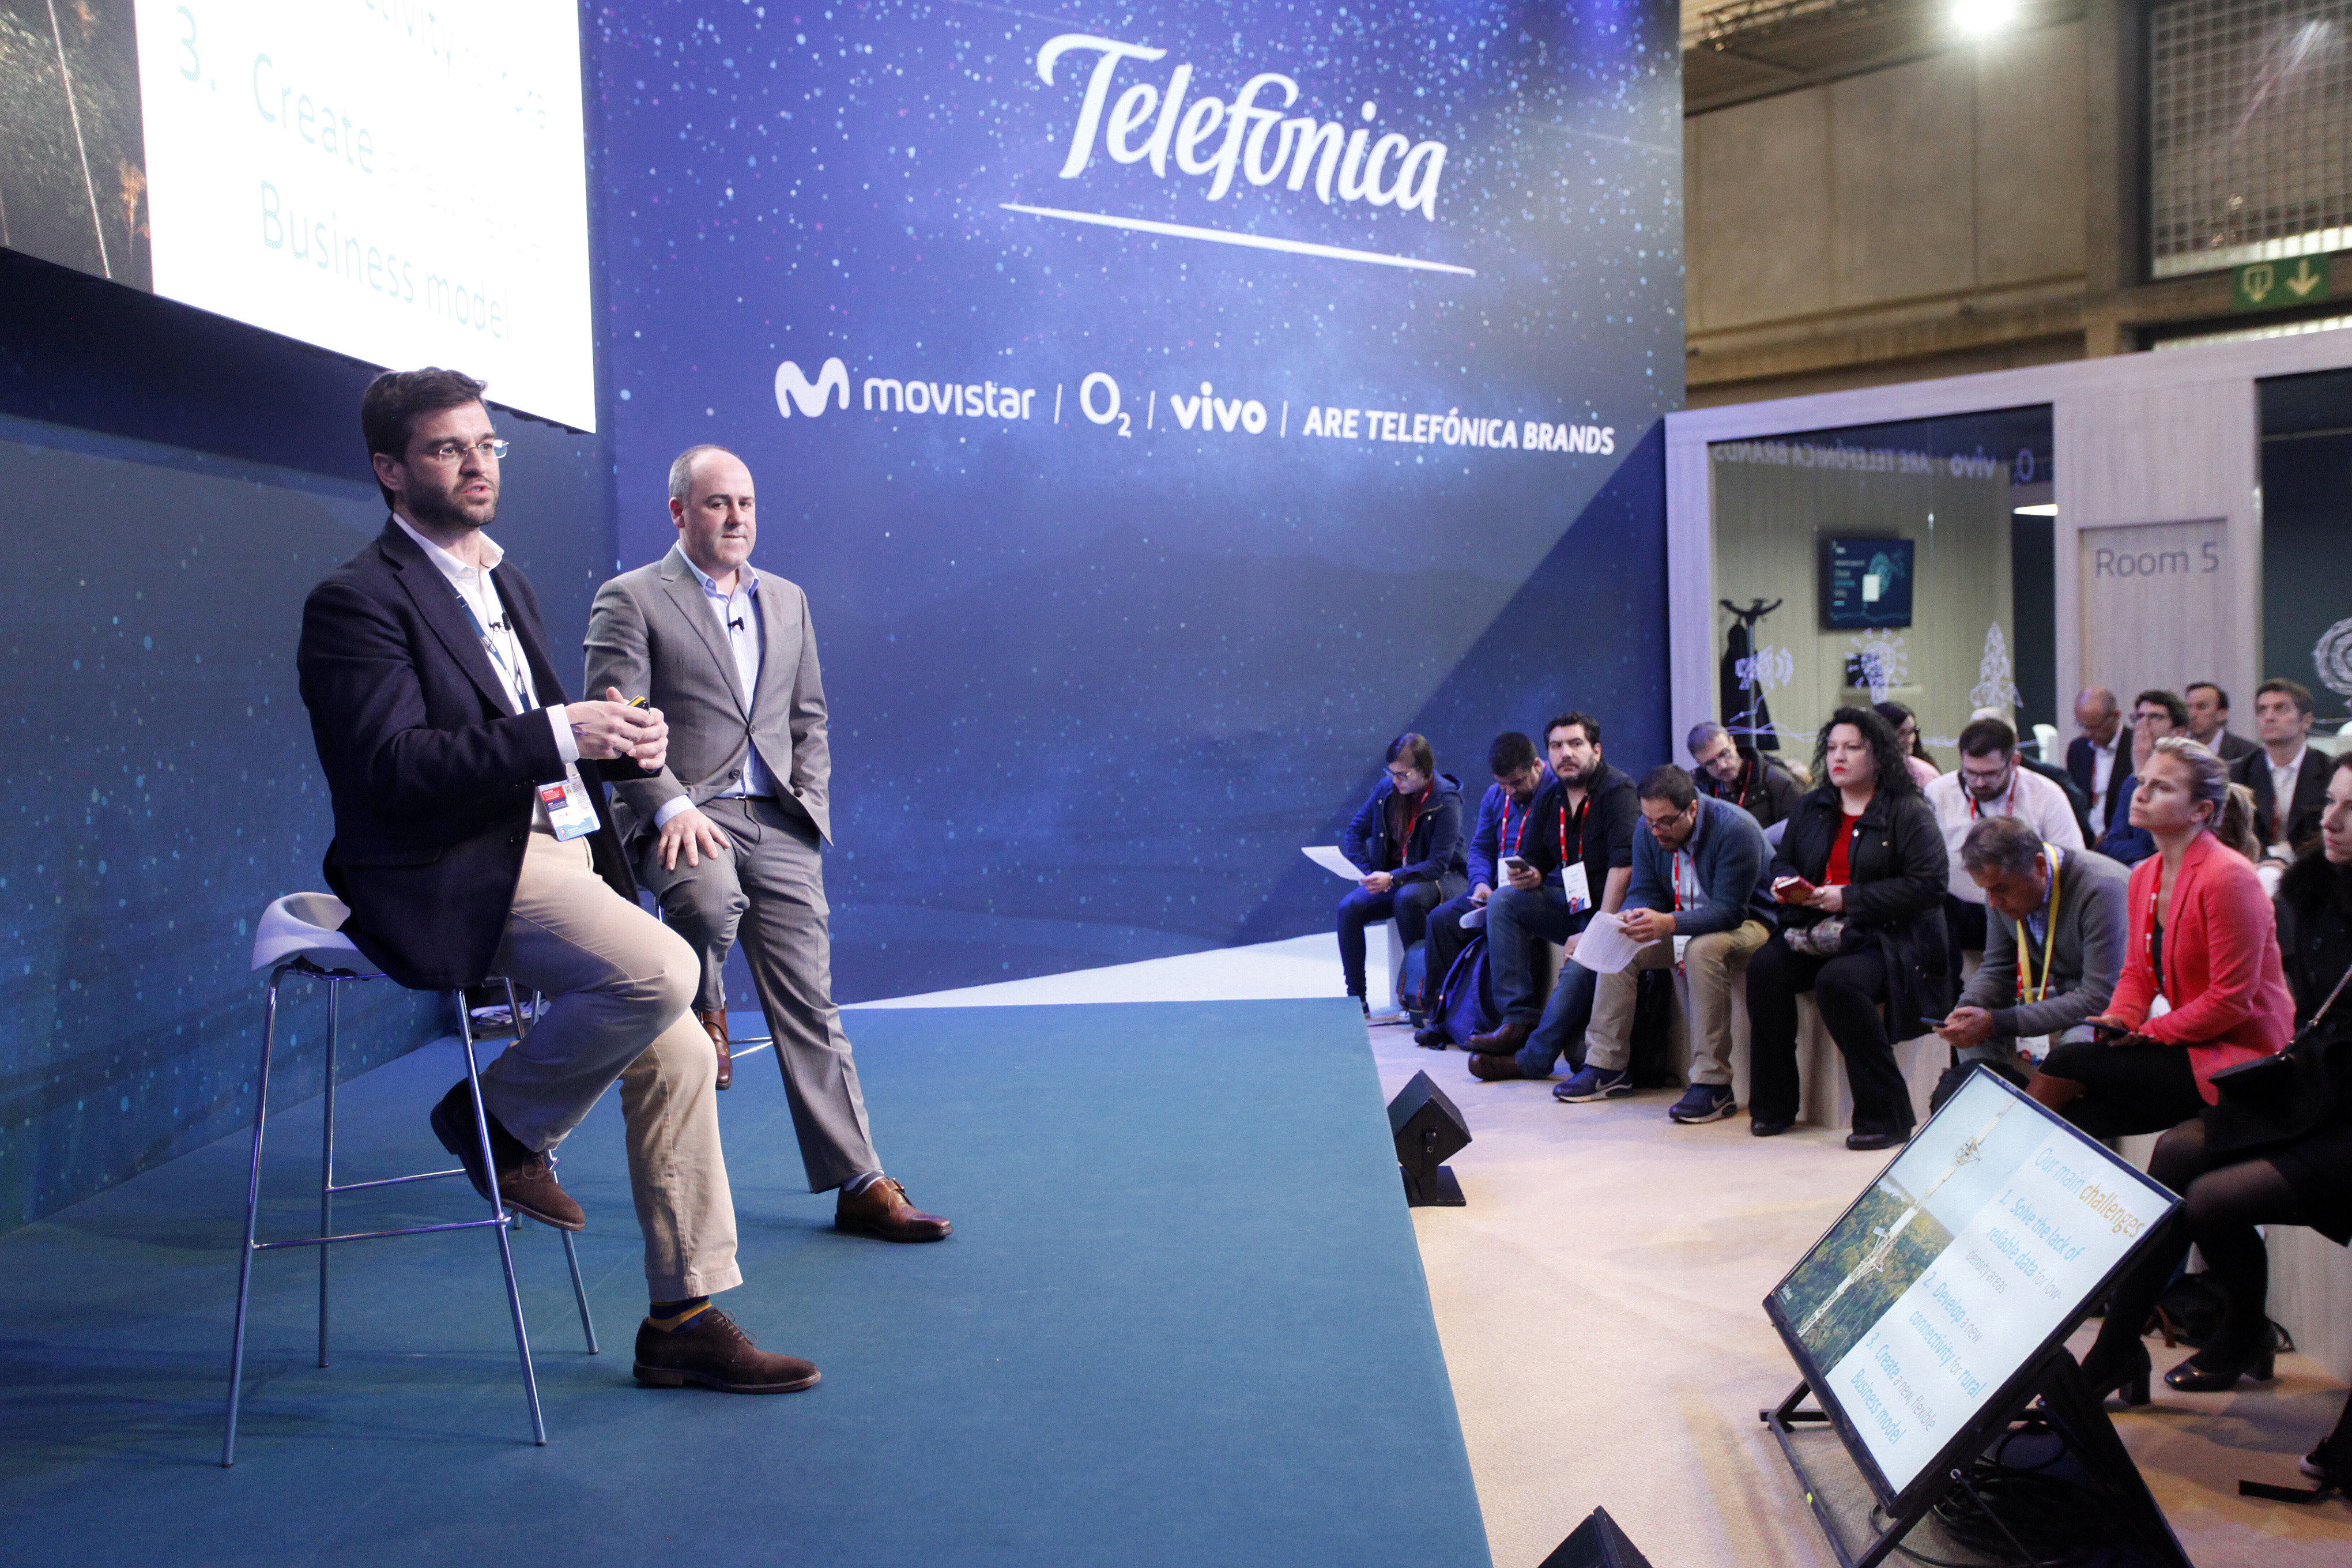 From left to right: Gonzalo Martín-Villa, director global de Innovación de Telefónica and Patrick López, director of customer centric networks de Telefónica